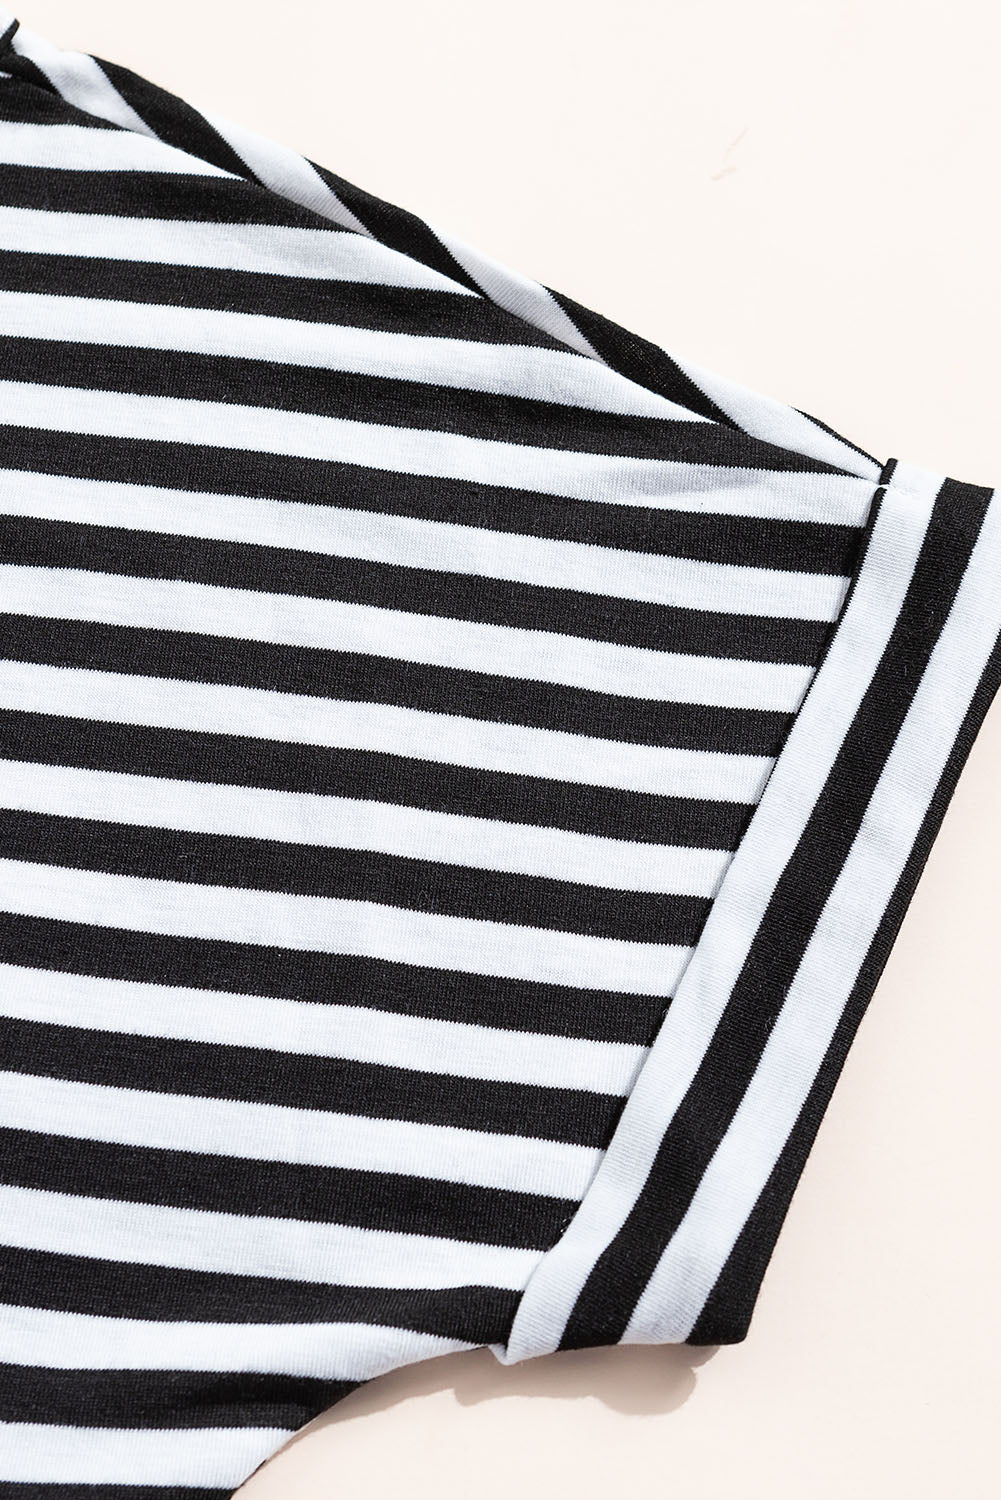 Black White Stripes Pocketed Belt Casual T-shirt Dress